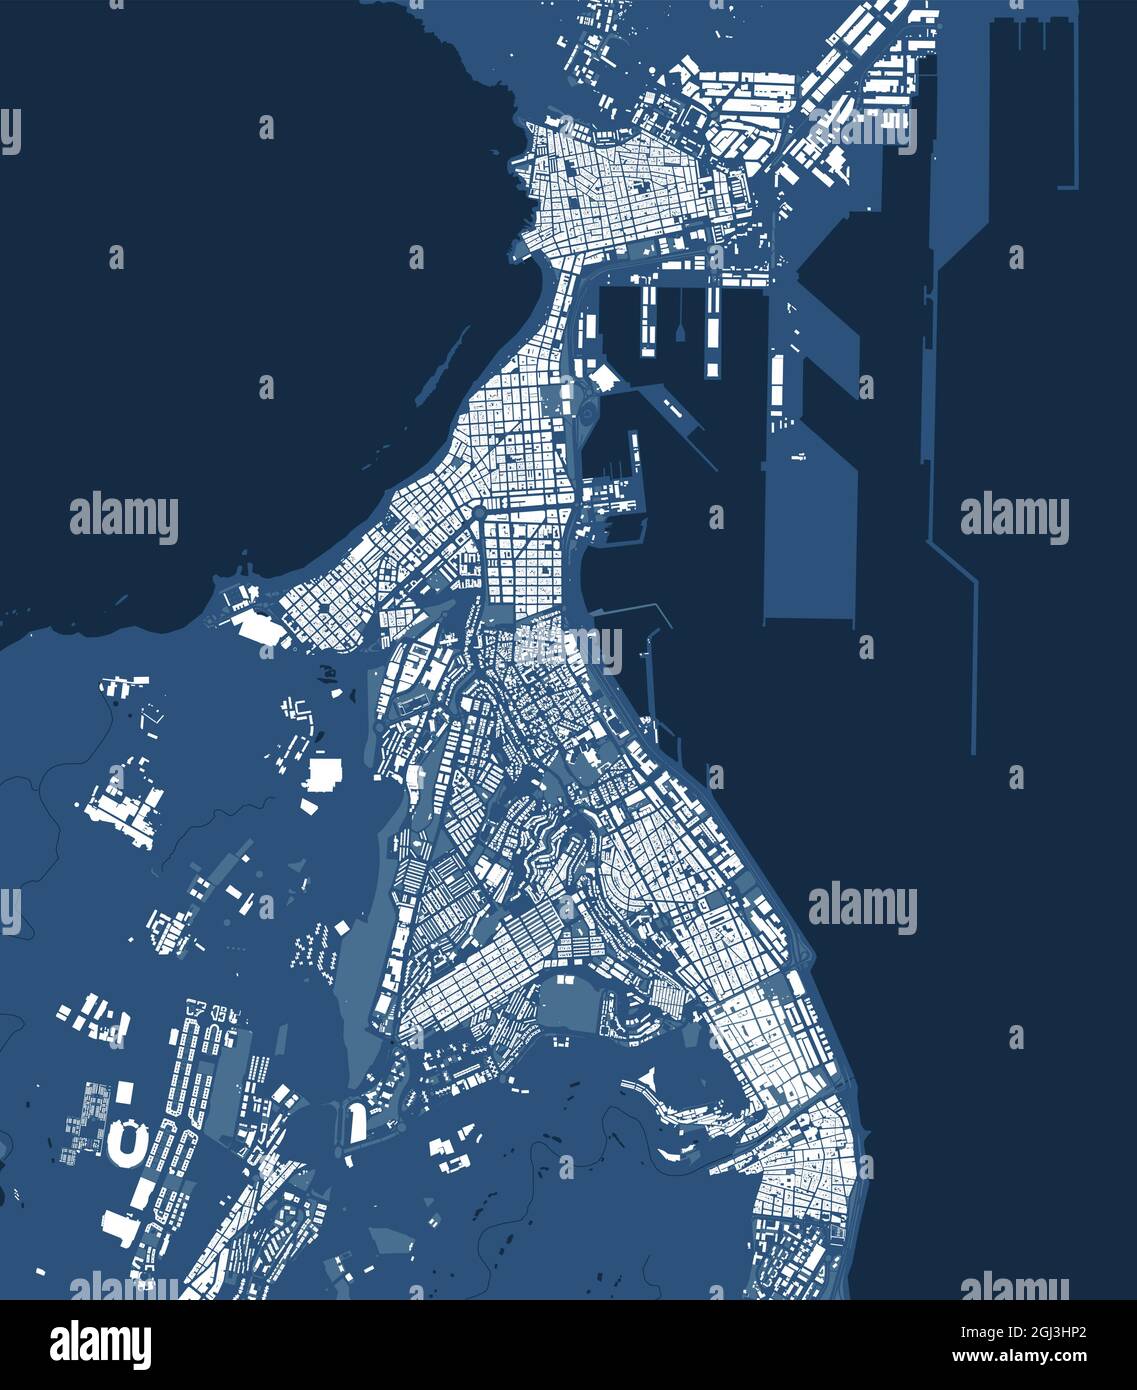 Detailliertes blaues Kartenplakat des Verwaltungsgebiets der Stadt Las Palmas de Gran Canaria. Stadtbild-Panorama. Dekorative Grafik Touristenkarte von Las Palmas terr Stock Vektor